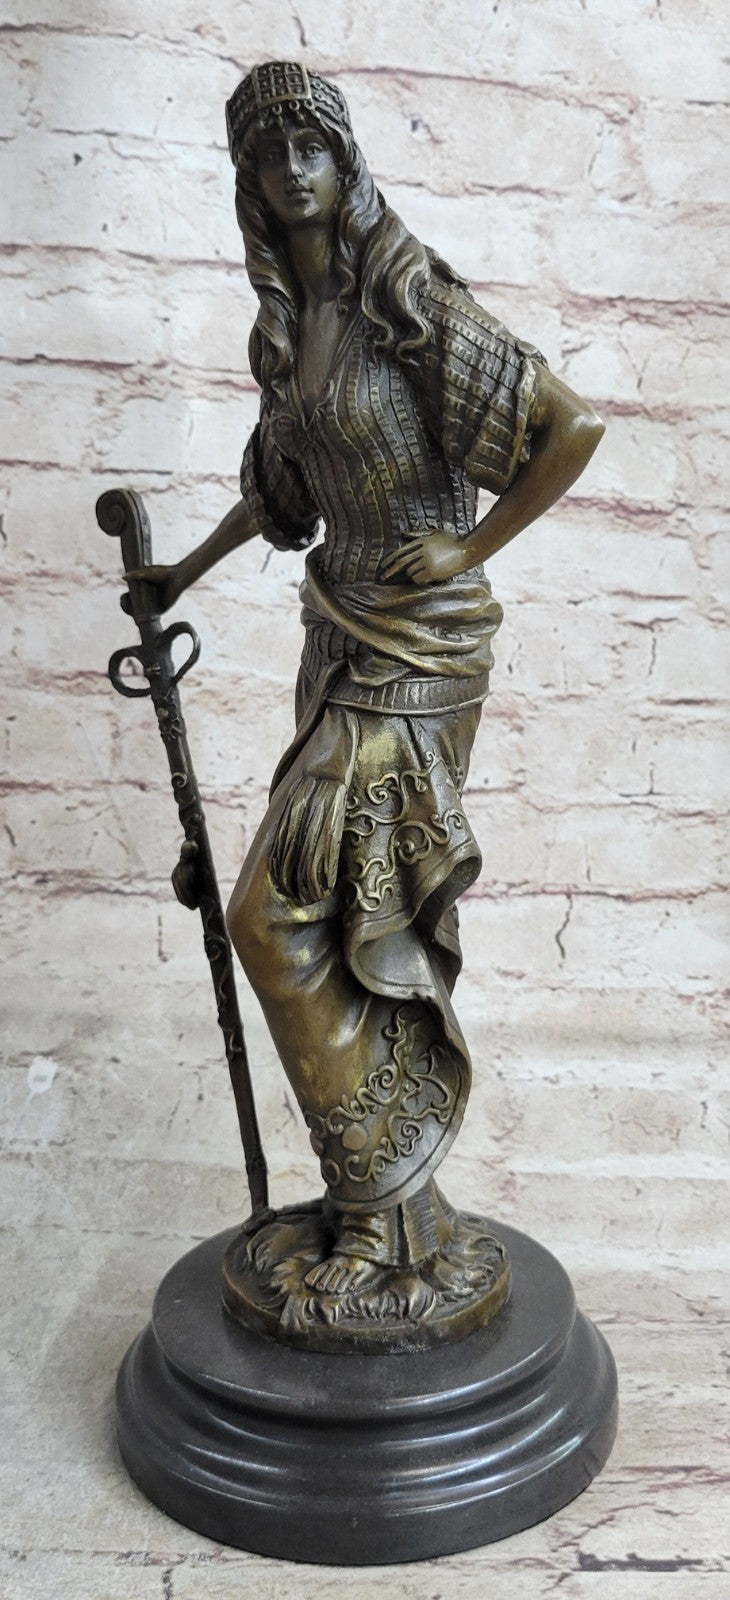 Collectible Hand Crafted Islamic Princess Hot Cast Bronze Sculpture Figurine Art